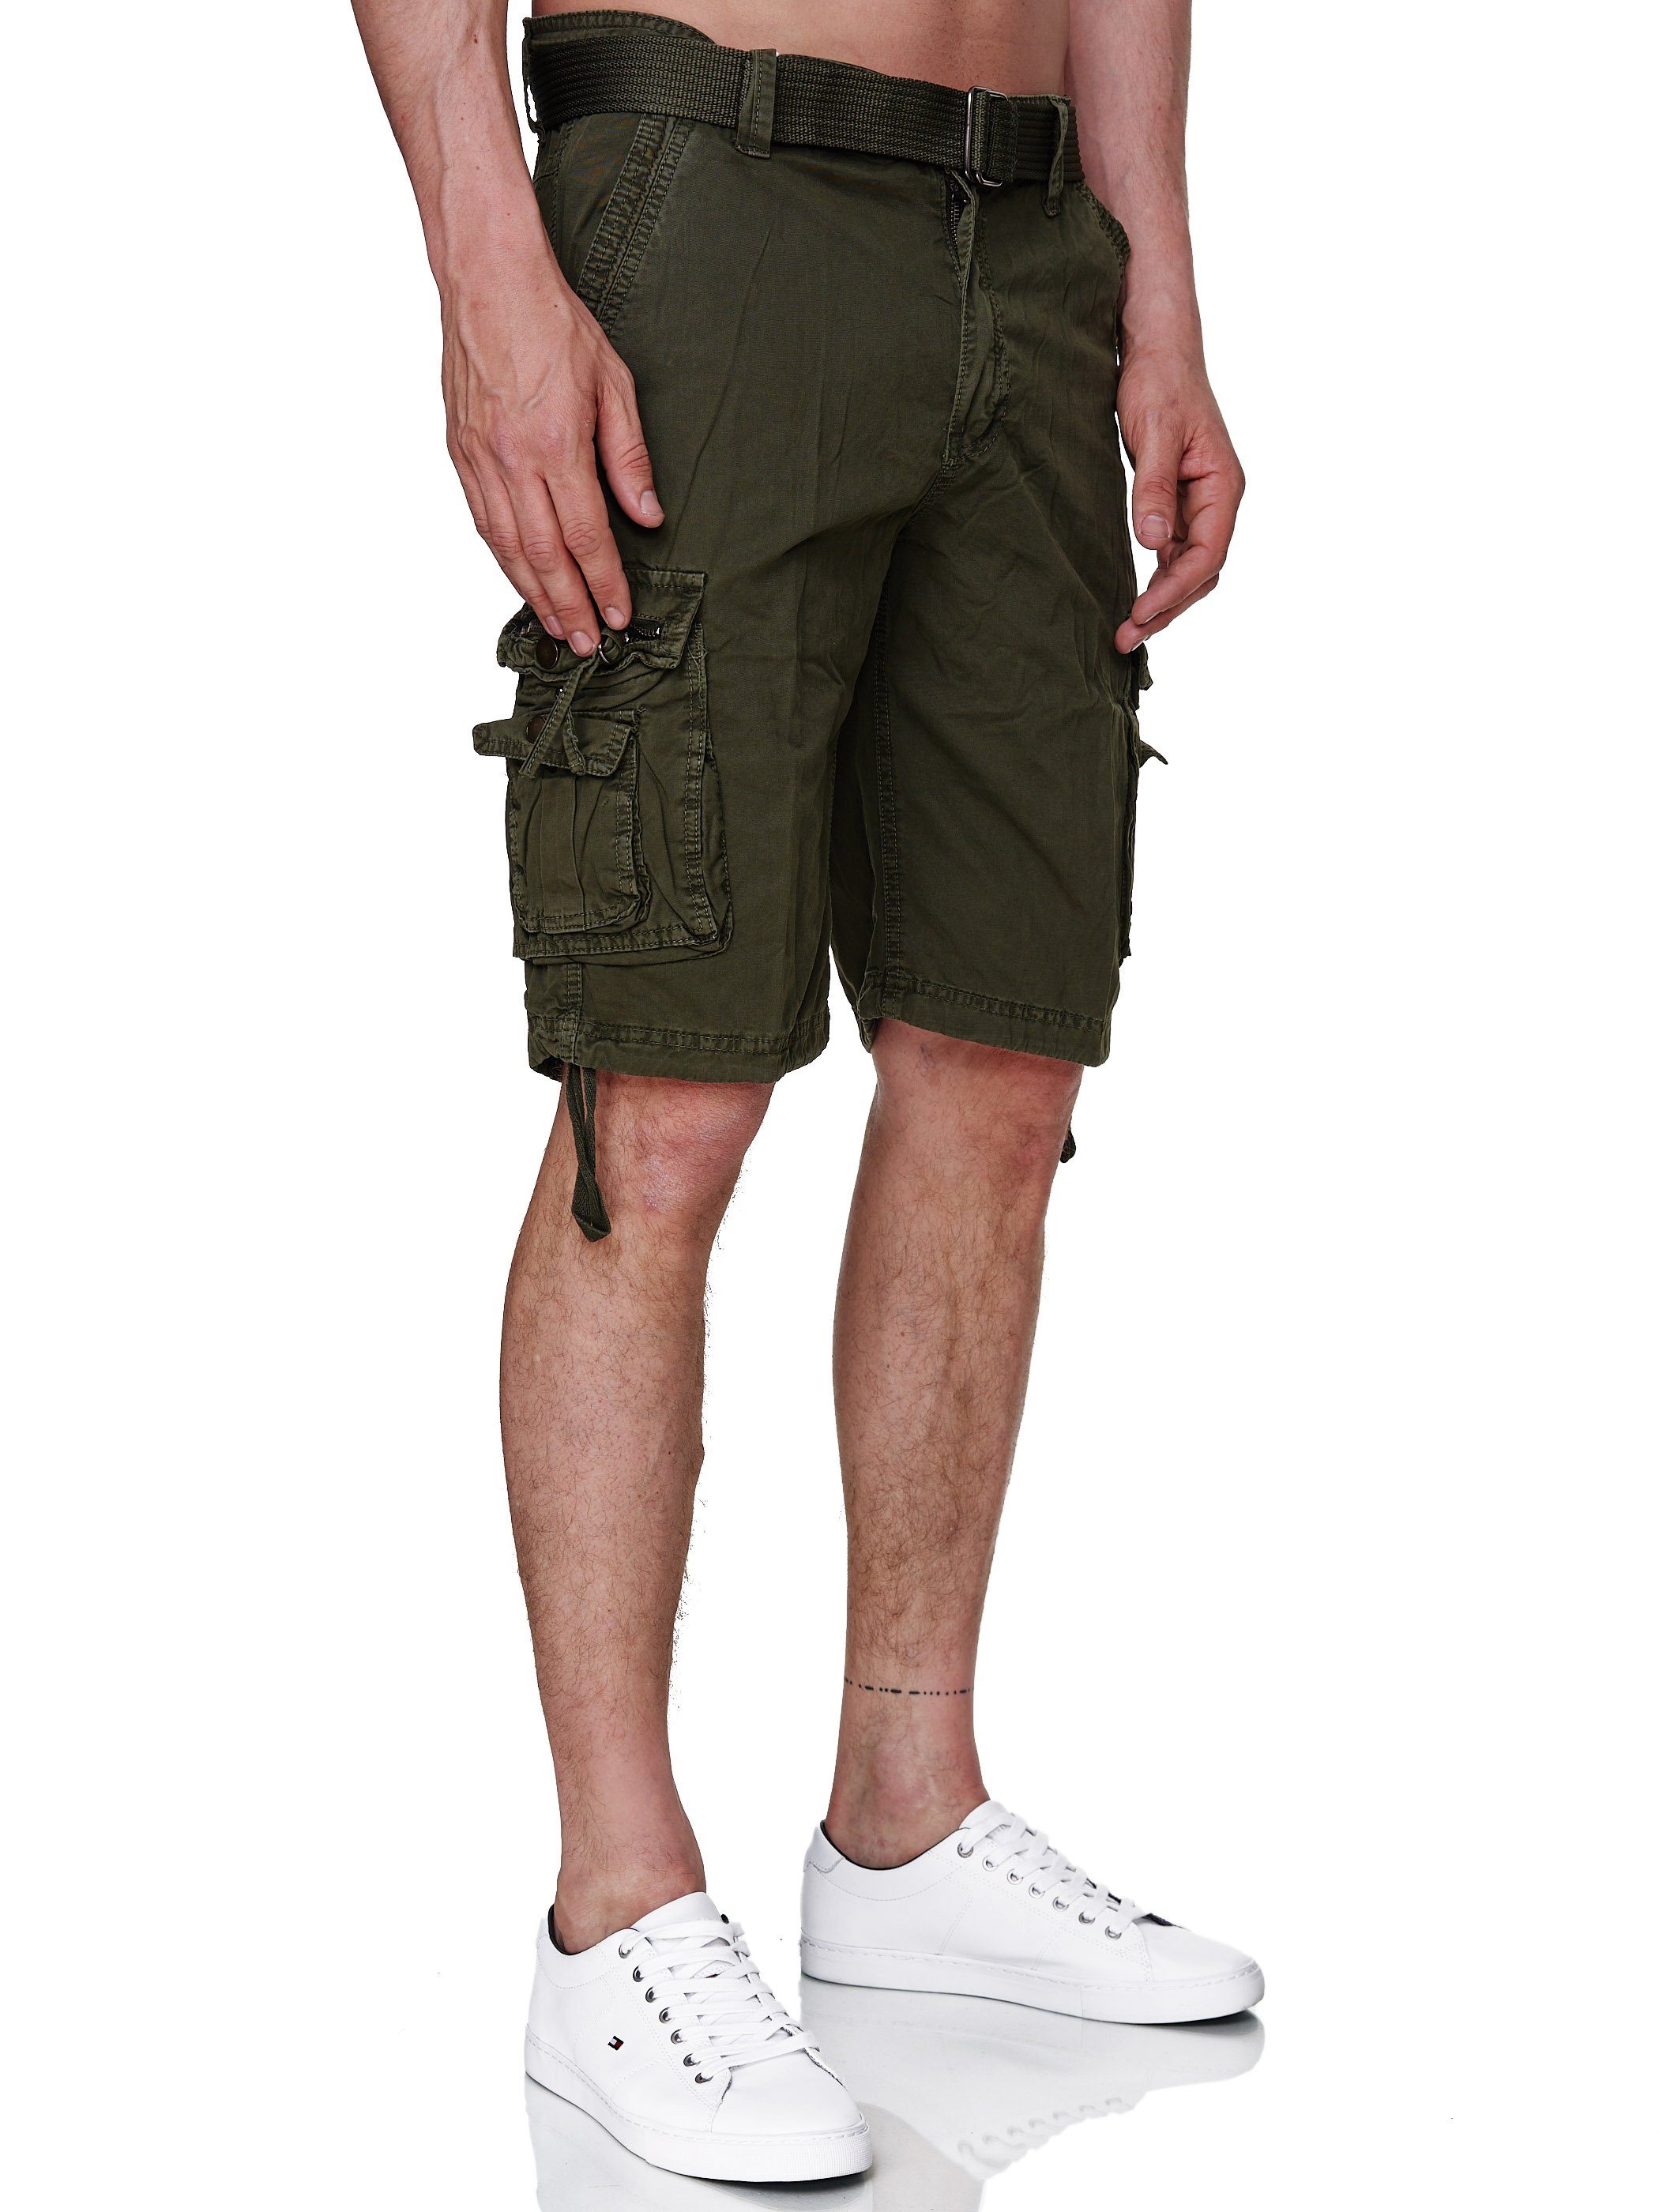 Kurze Army Rayshyne (Bermuda Shorts Taschen Cargoshorts Grün Viele Gürtel) RSH02 Sommer mit